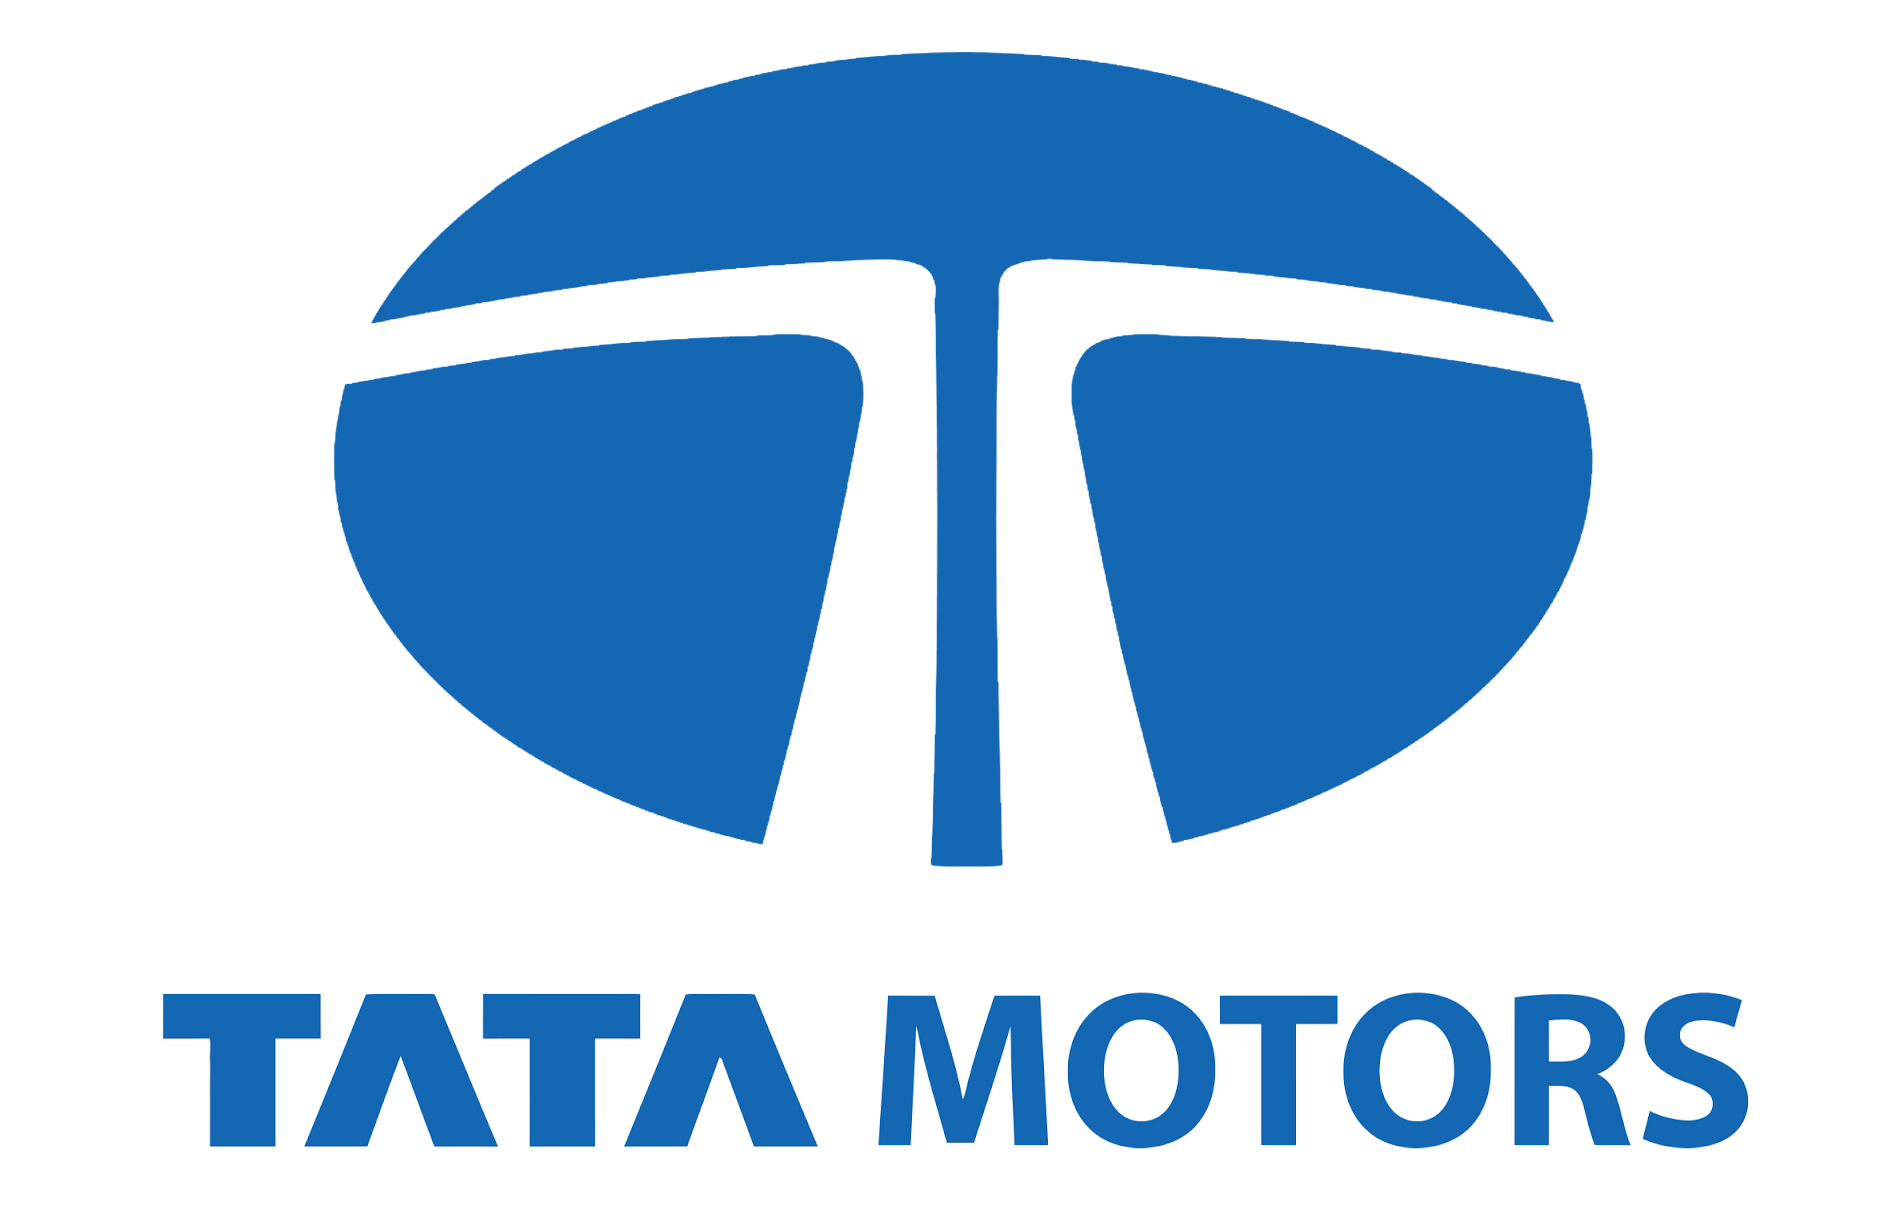 Tata Motors Cars Showroom - KVR Dream Vehicles Pvt Ltd - Logo